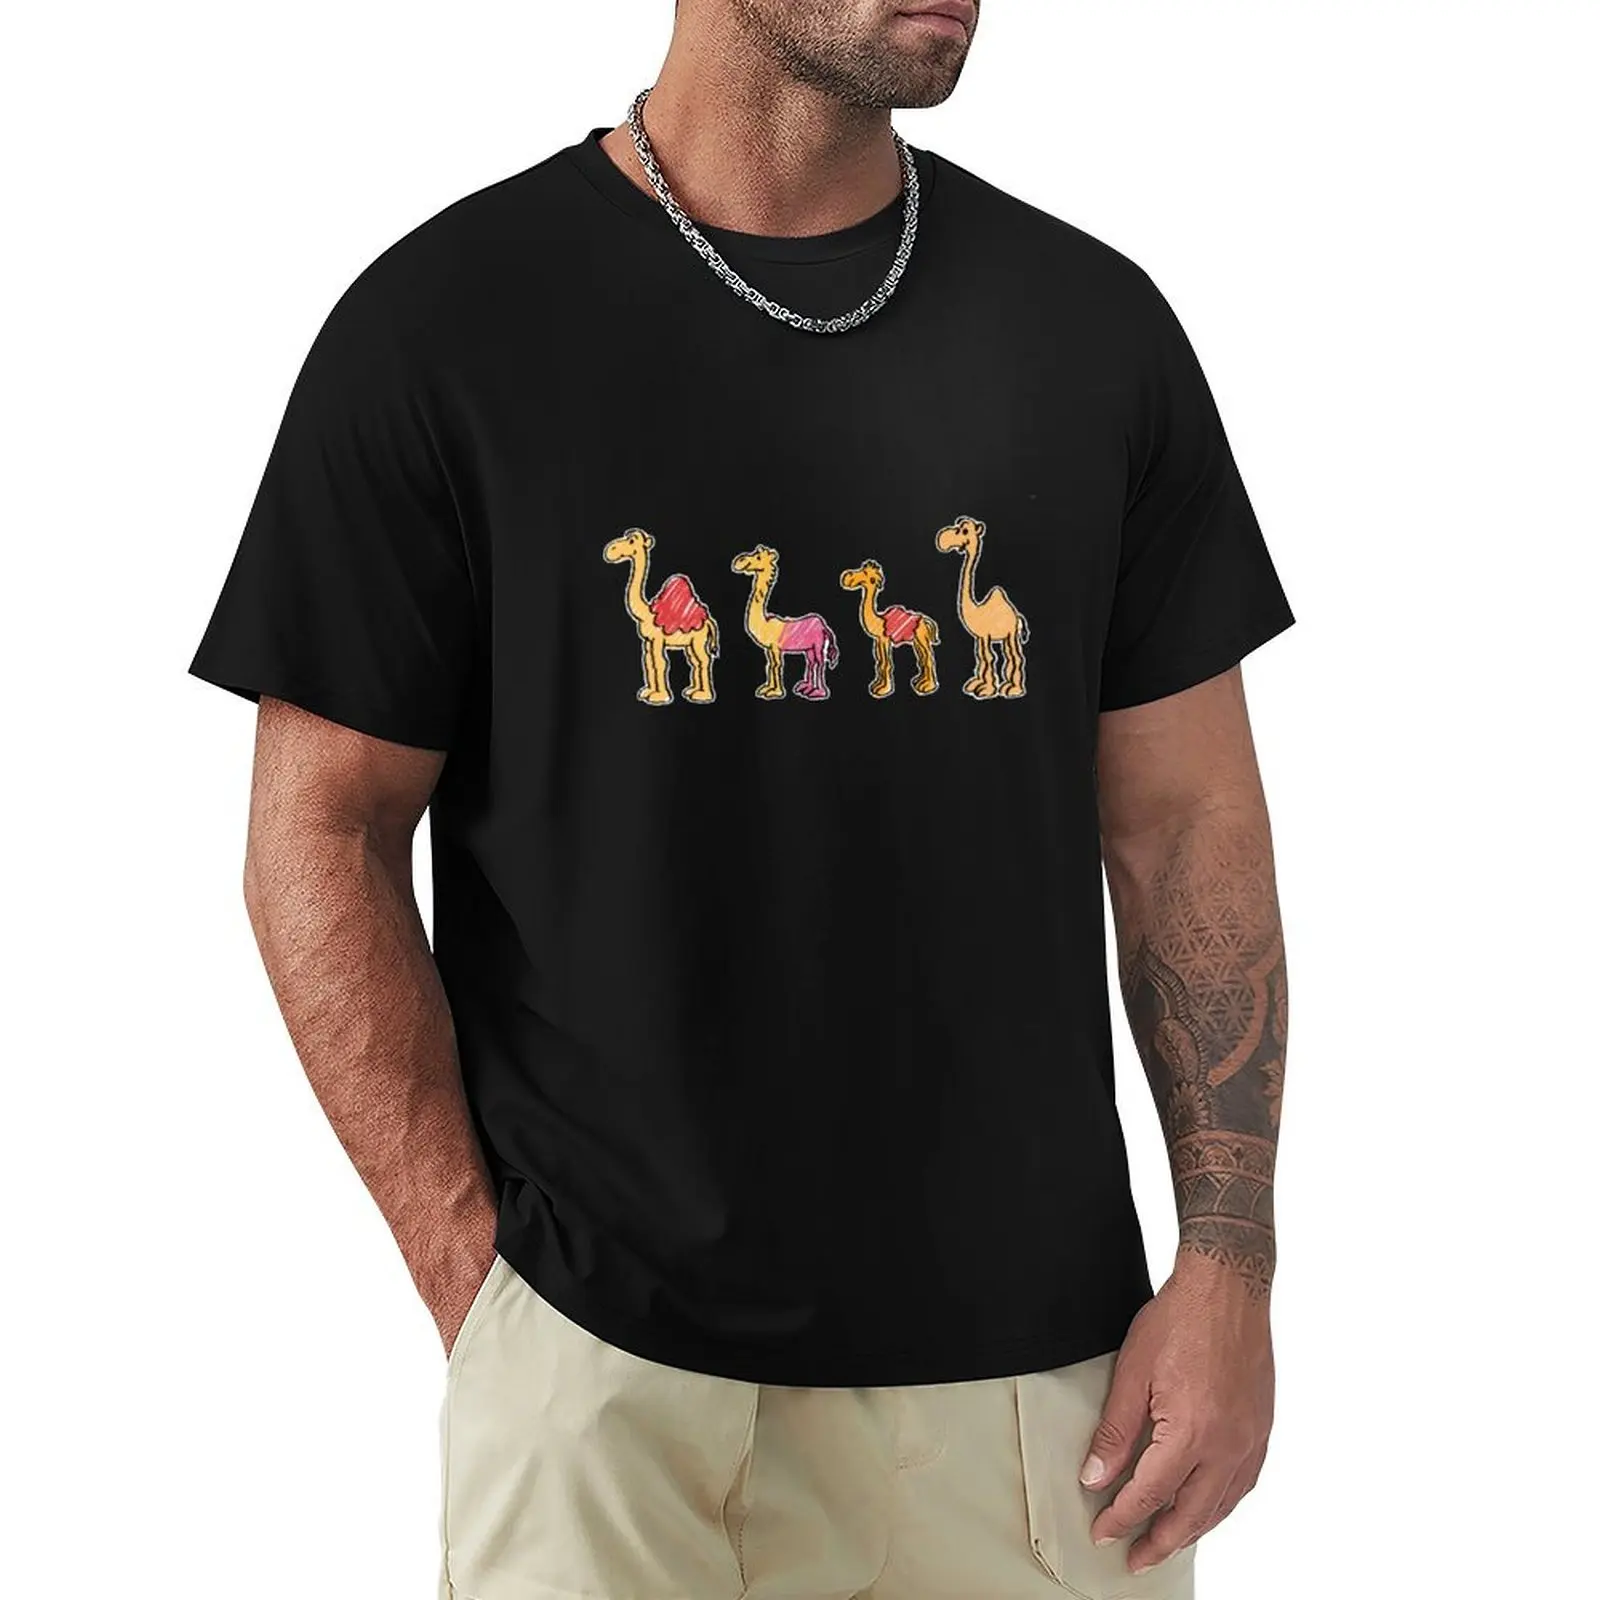 crayon camel animals T-Shirt quick drying plus sizes men t shirt